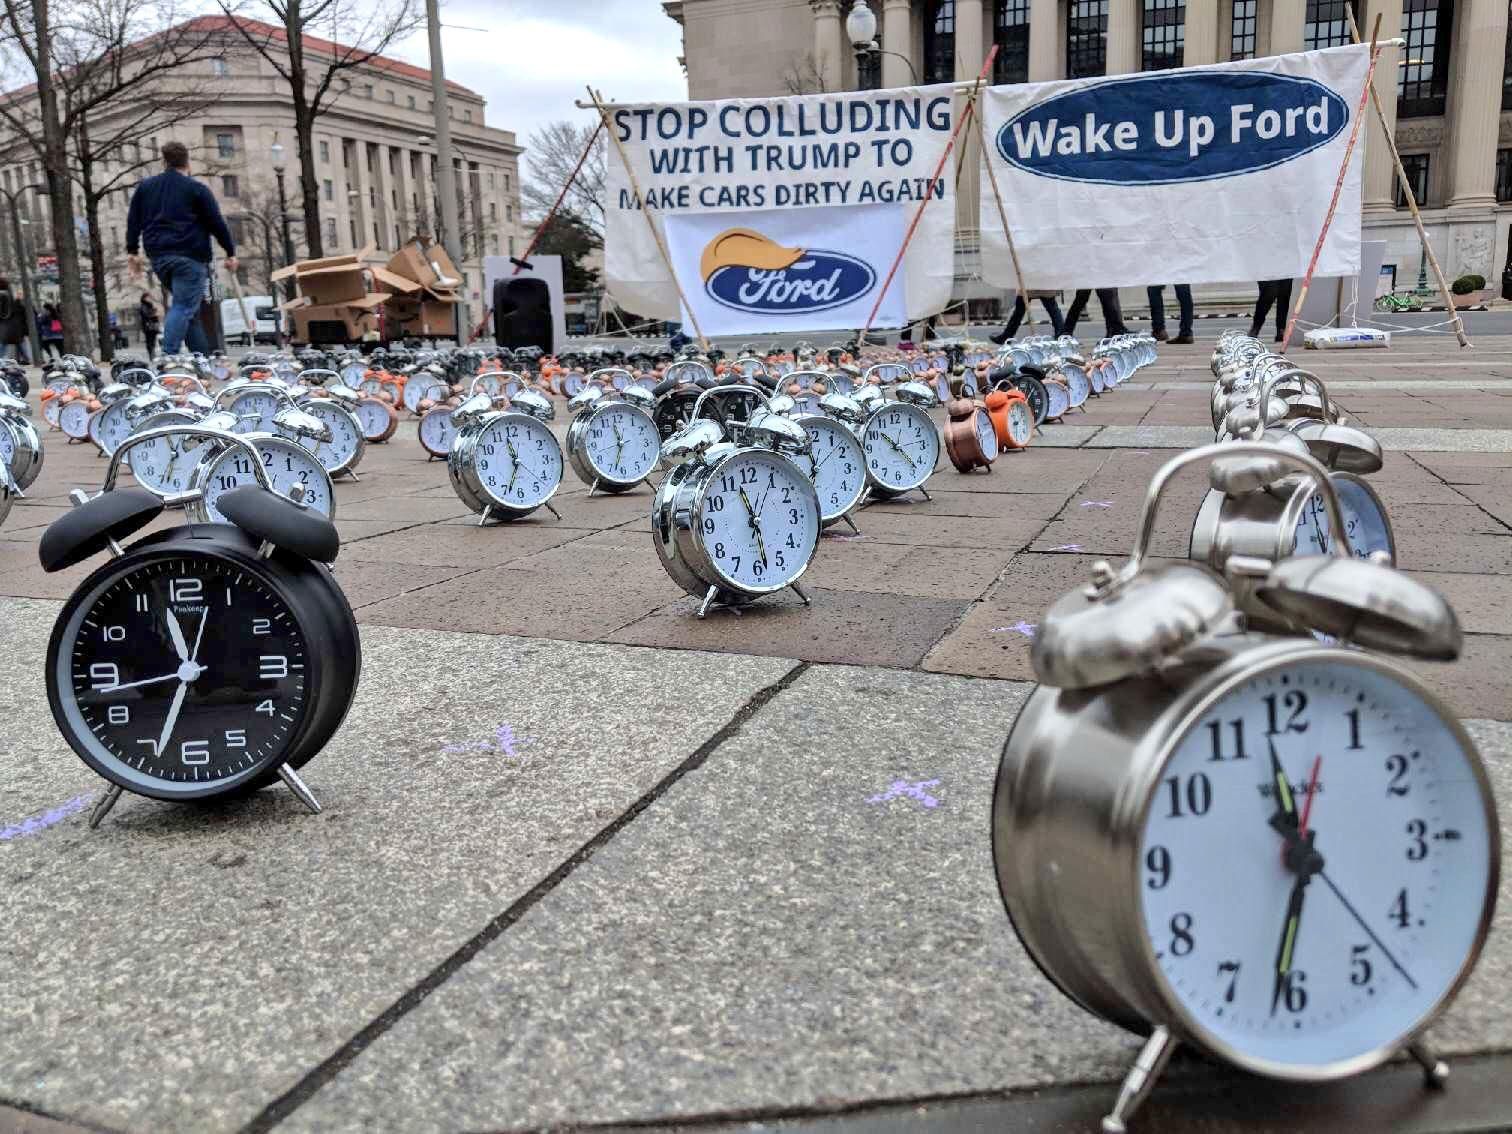 Alarm clocks outside Ford headquarters in Washington, D.C. demand the auto company "stop colluding with Trump." (Photo: Public Citizen)